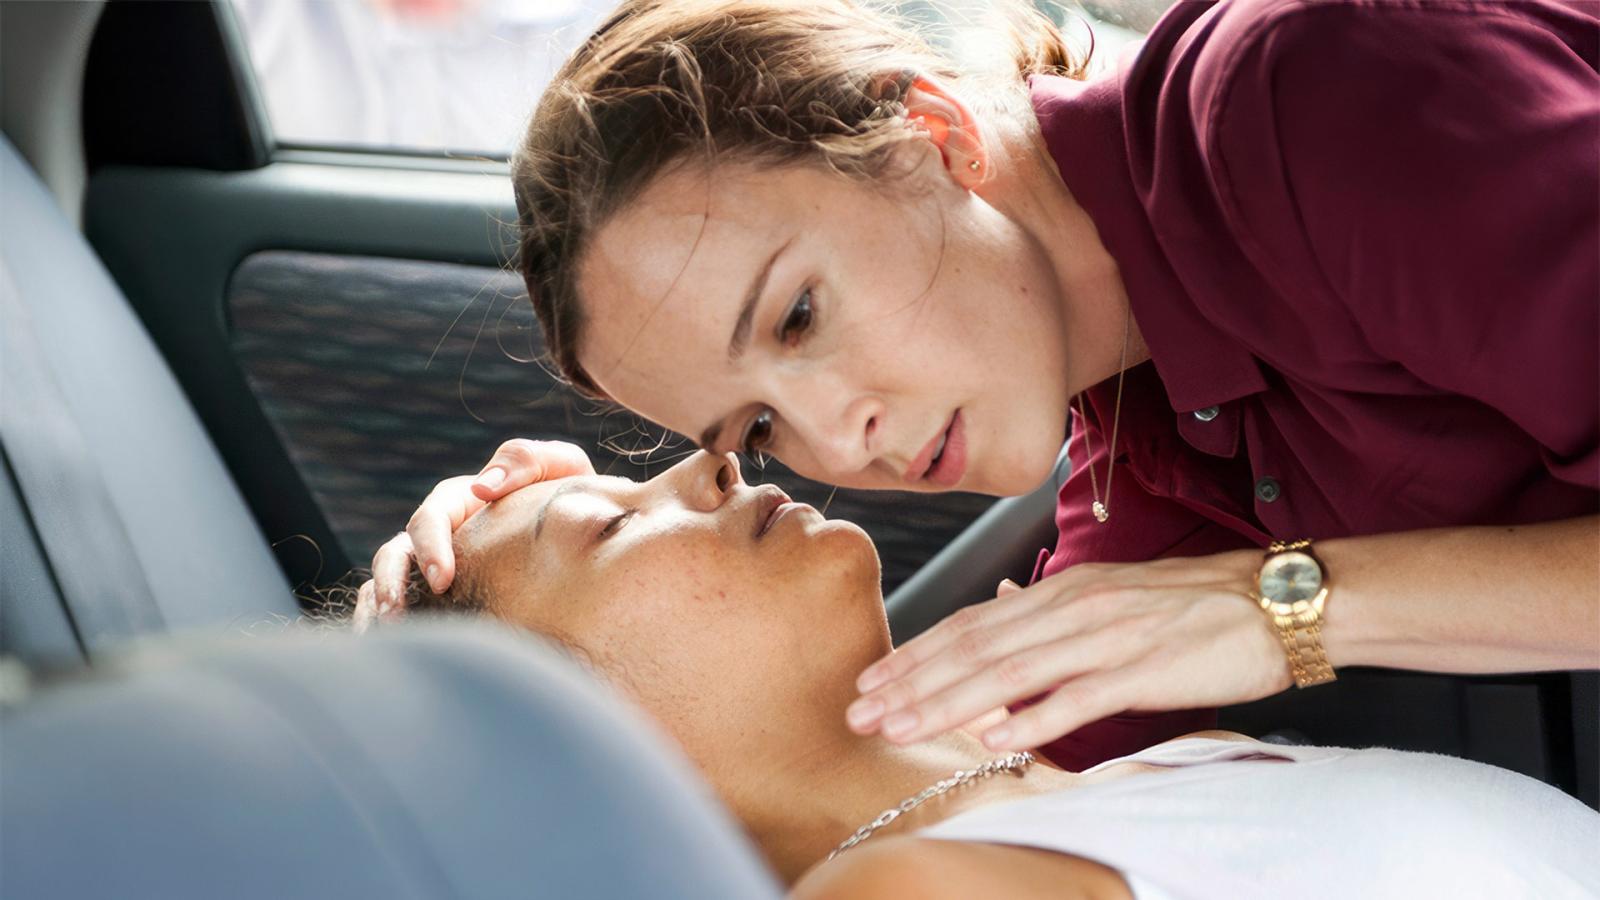 10 Overlooked Medical Dramas Beyond Grey's Anatomy - image 5